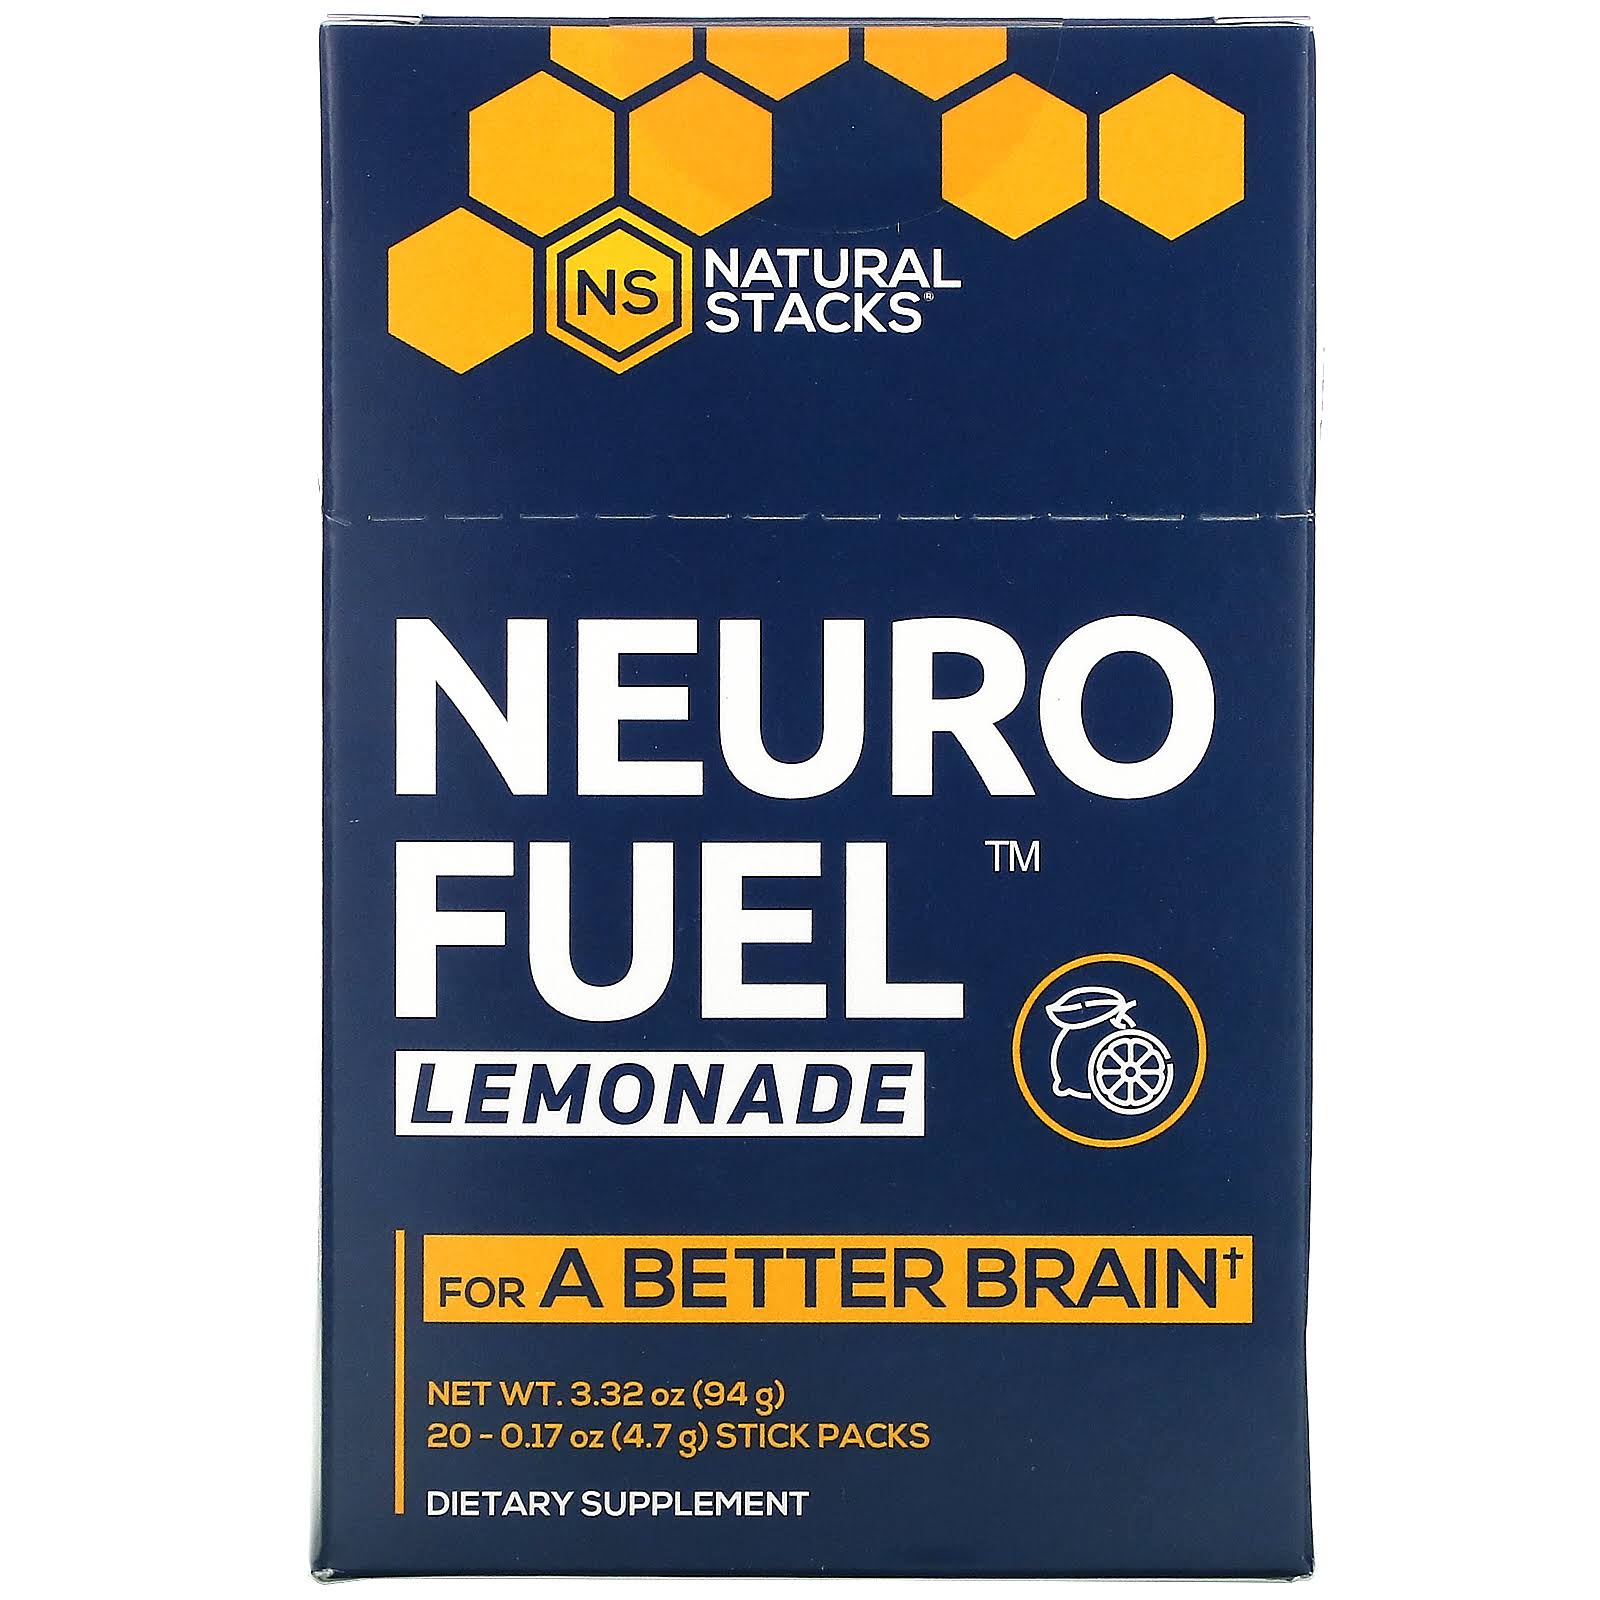 Natural Stacks Neuro FUEL, Lemonade, 20 Stick Packs, 0.17 oz ( 4.7 g) Each